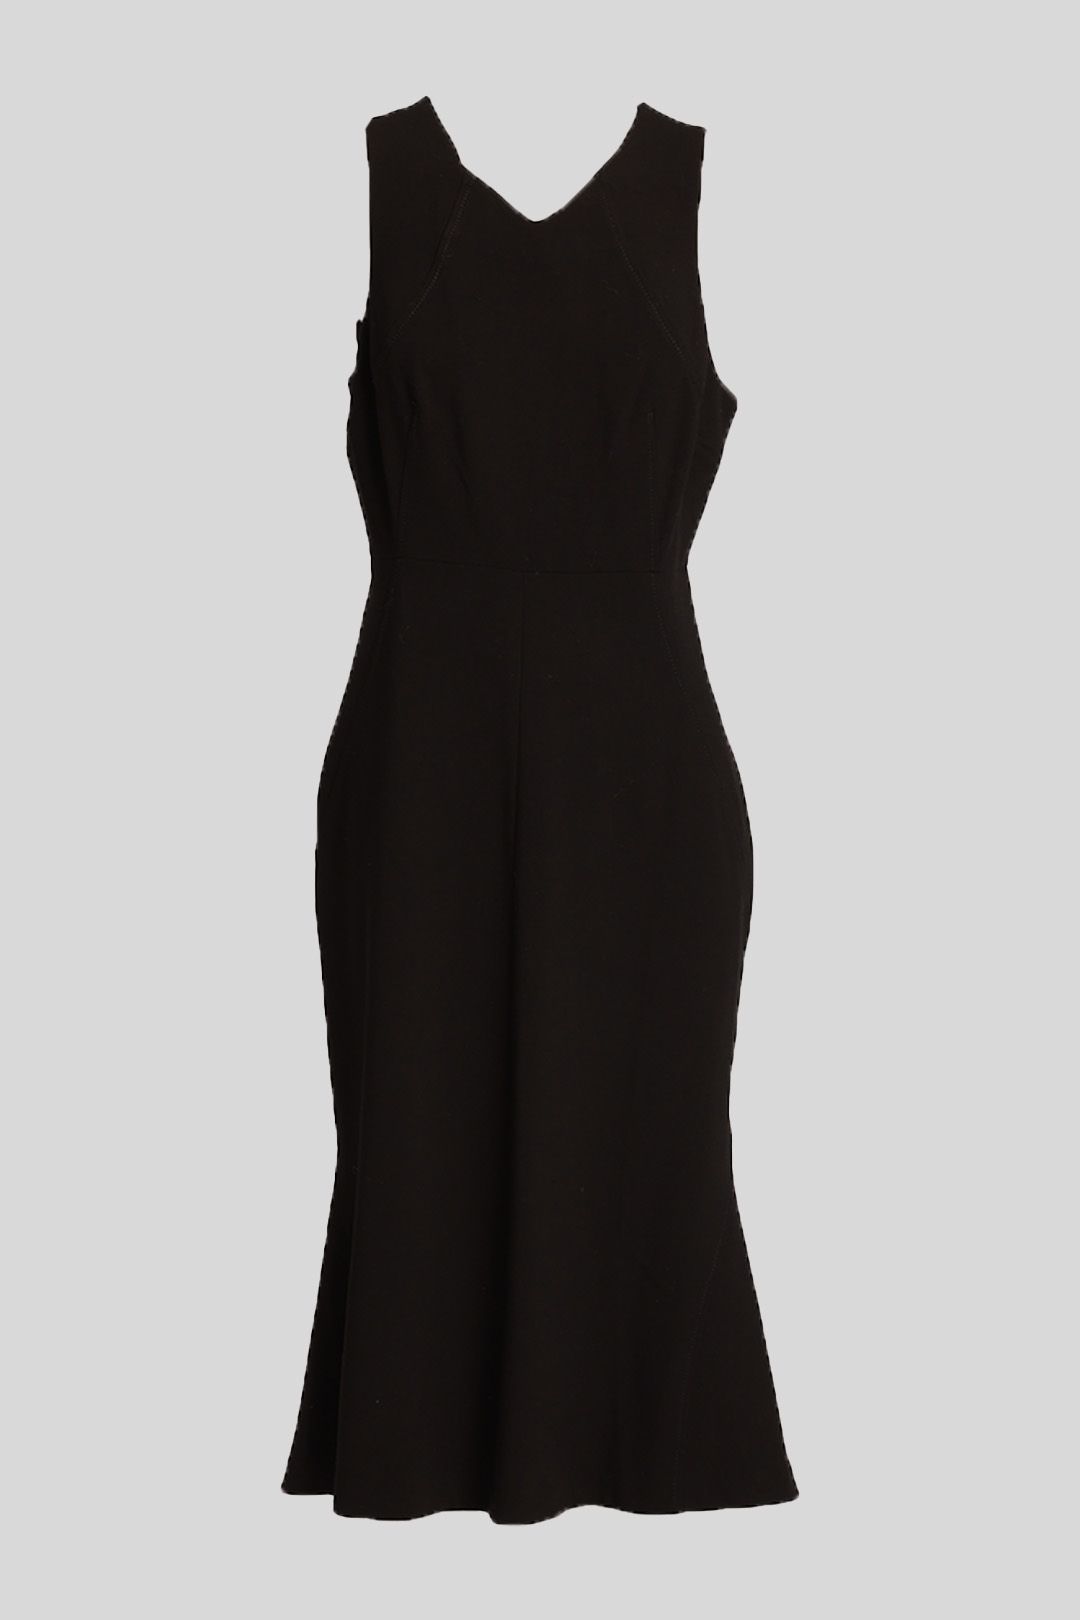 Saba - Black Sleeveless Midi Dress